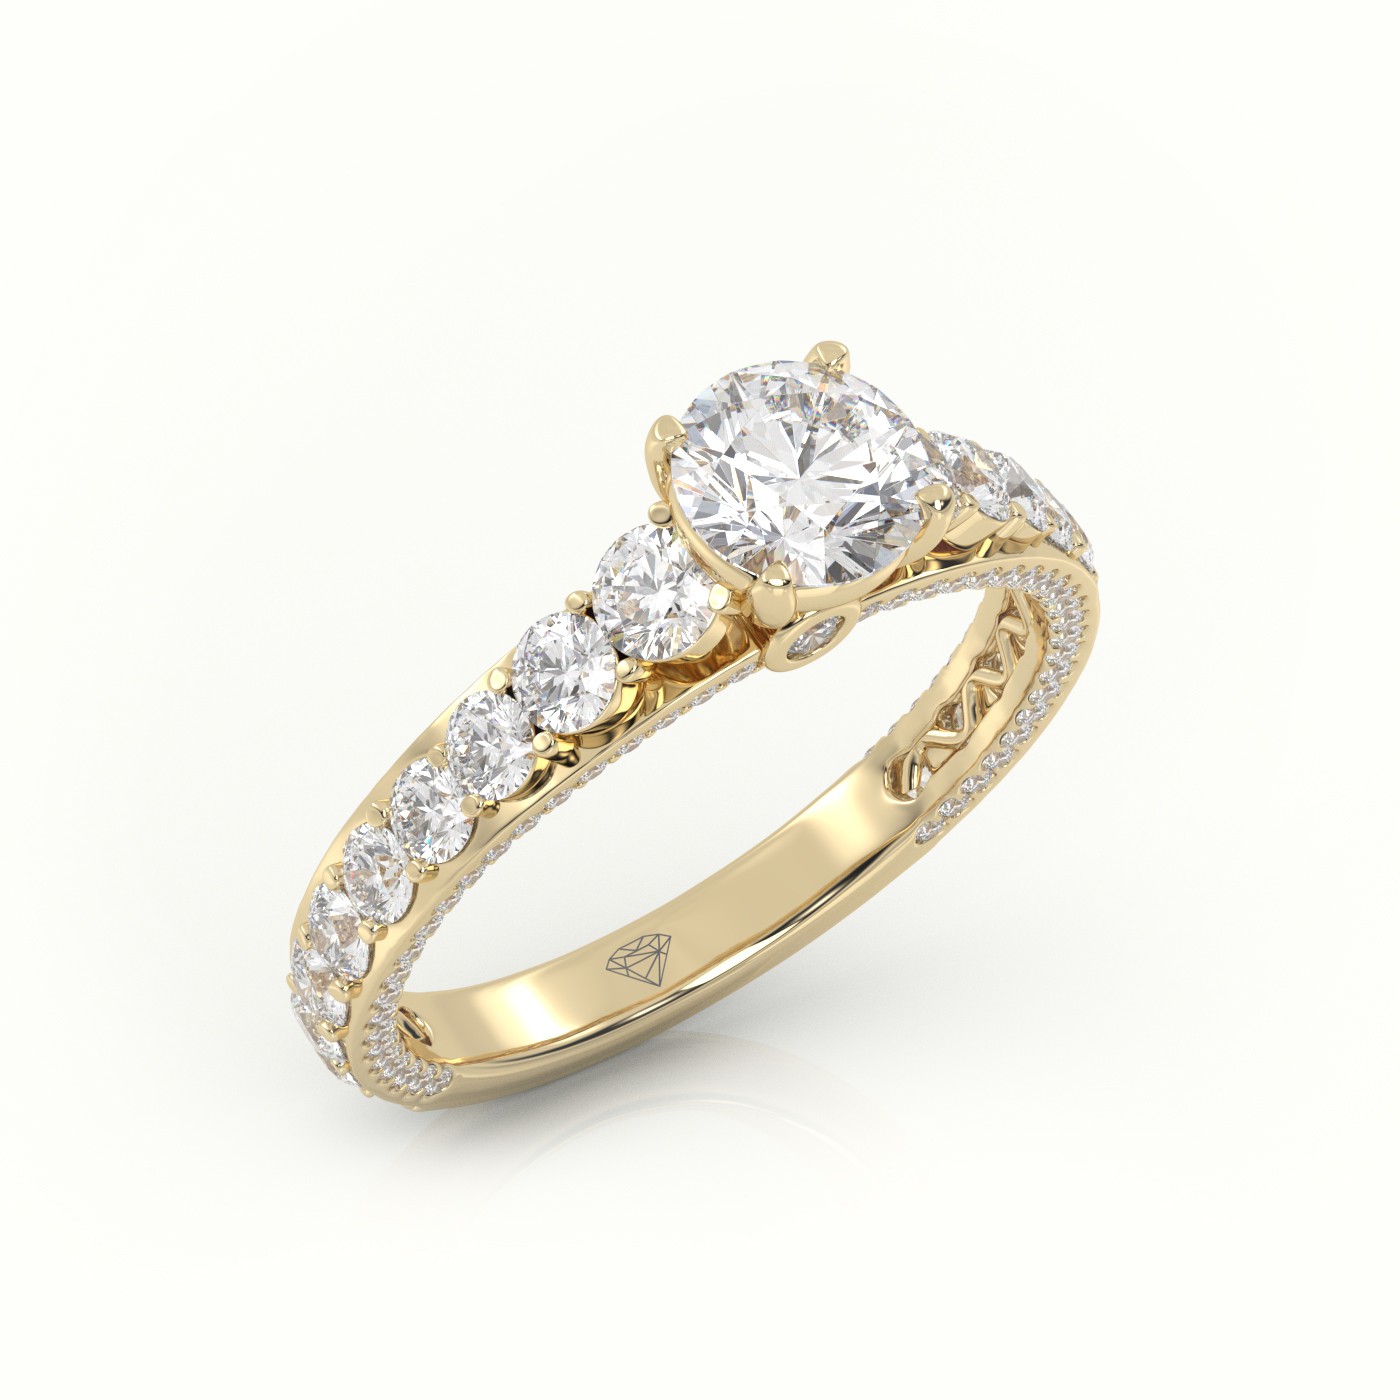 18K YELLOW GOLD ROUND CUT DIAMOND 4 PRONGS PAVE SETTING ENGAGEMENT RING